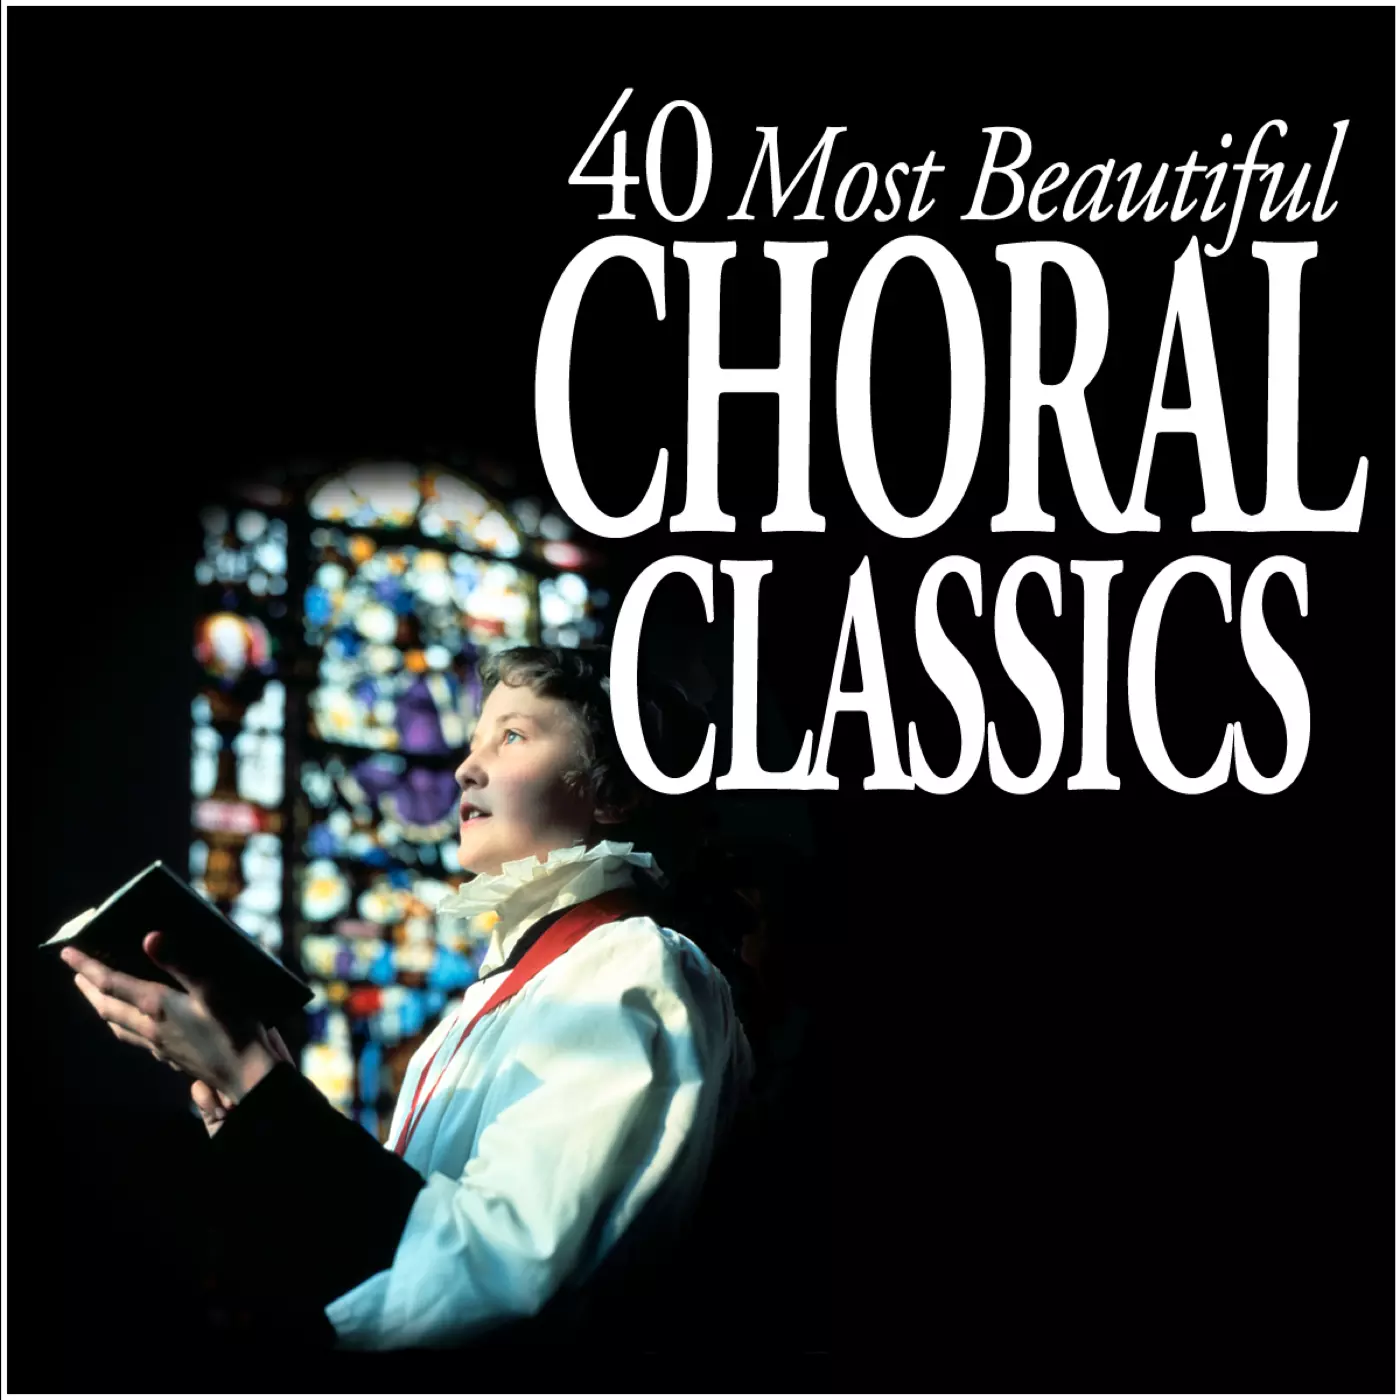 40 Most Beautiful Choral Classics